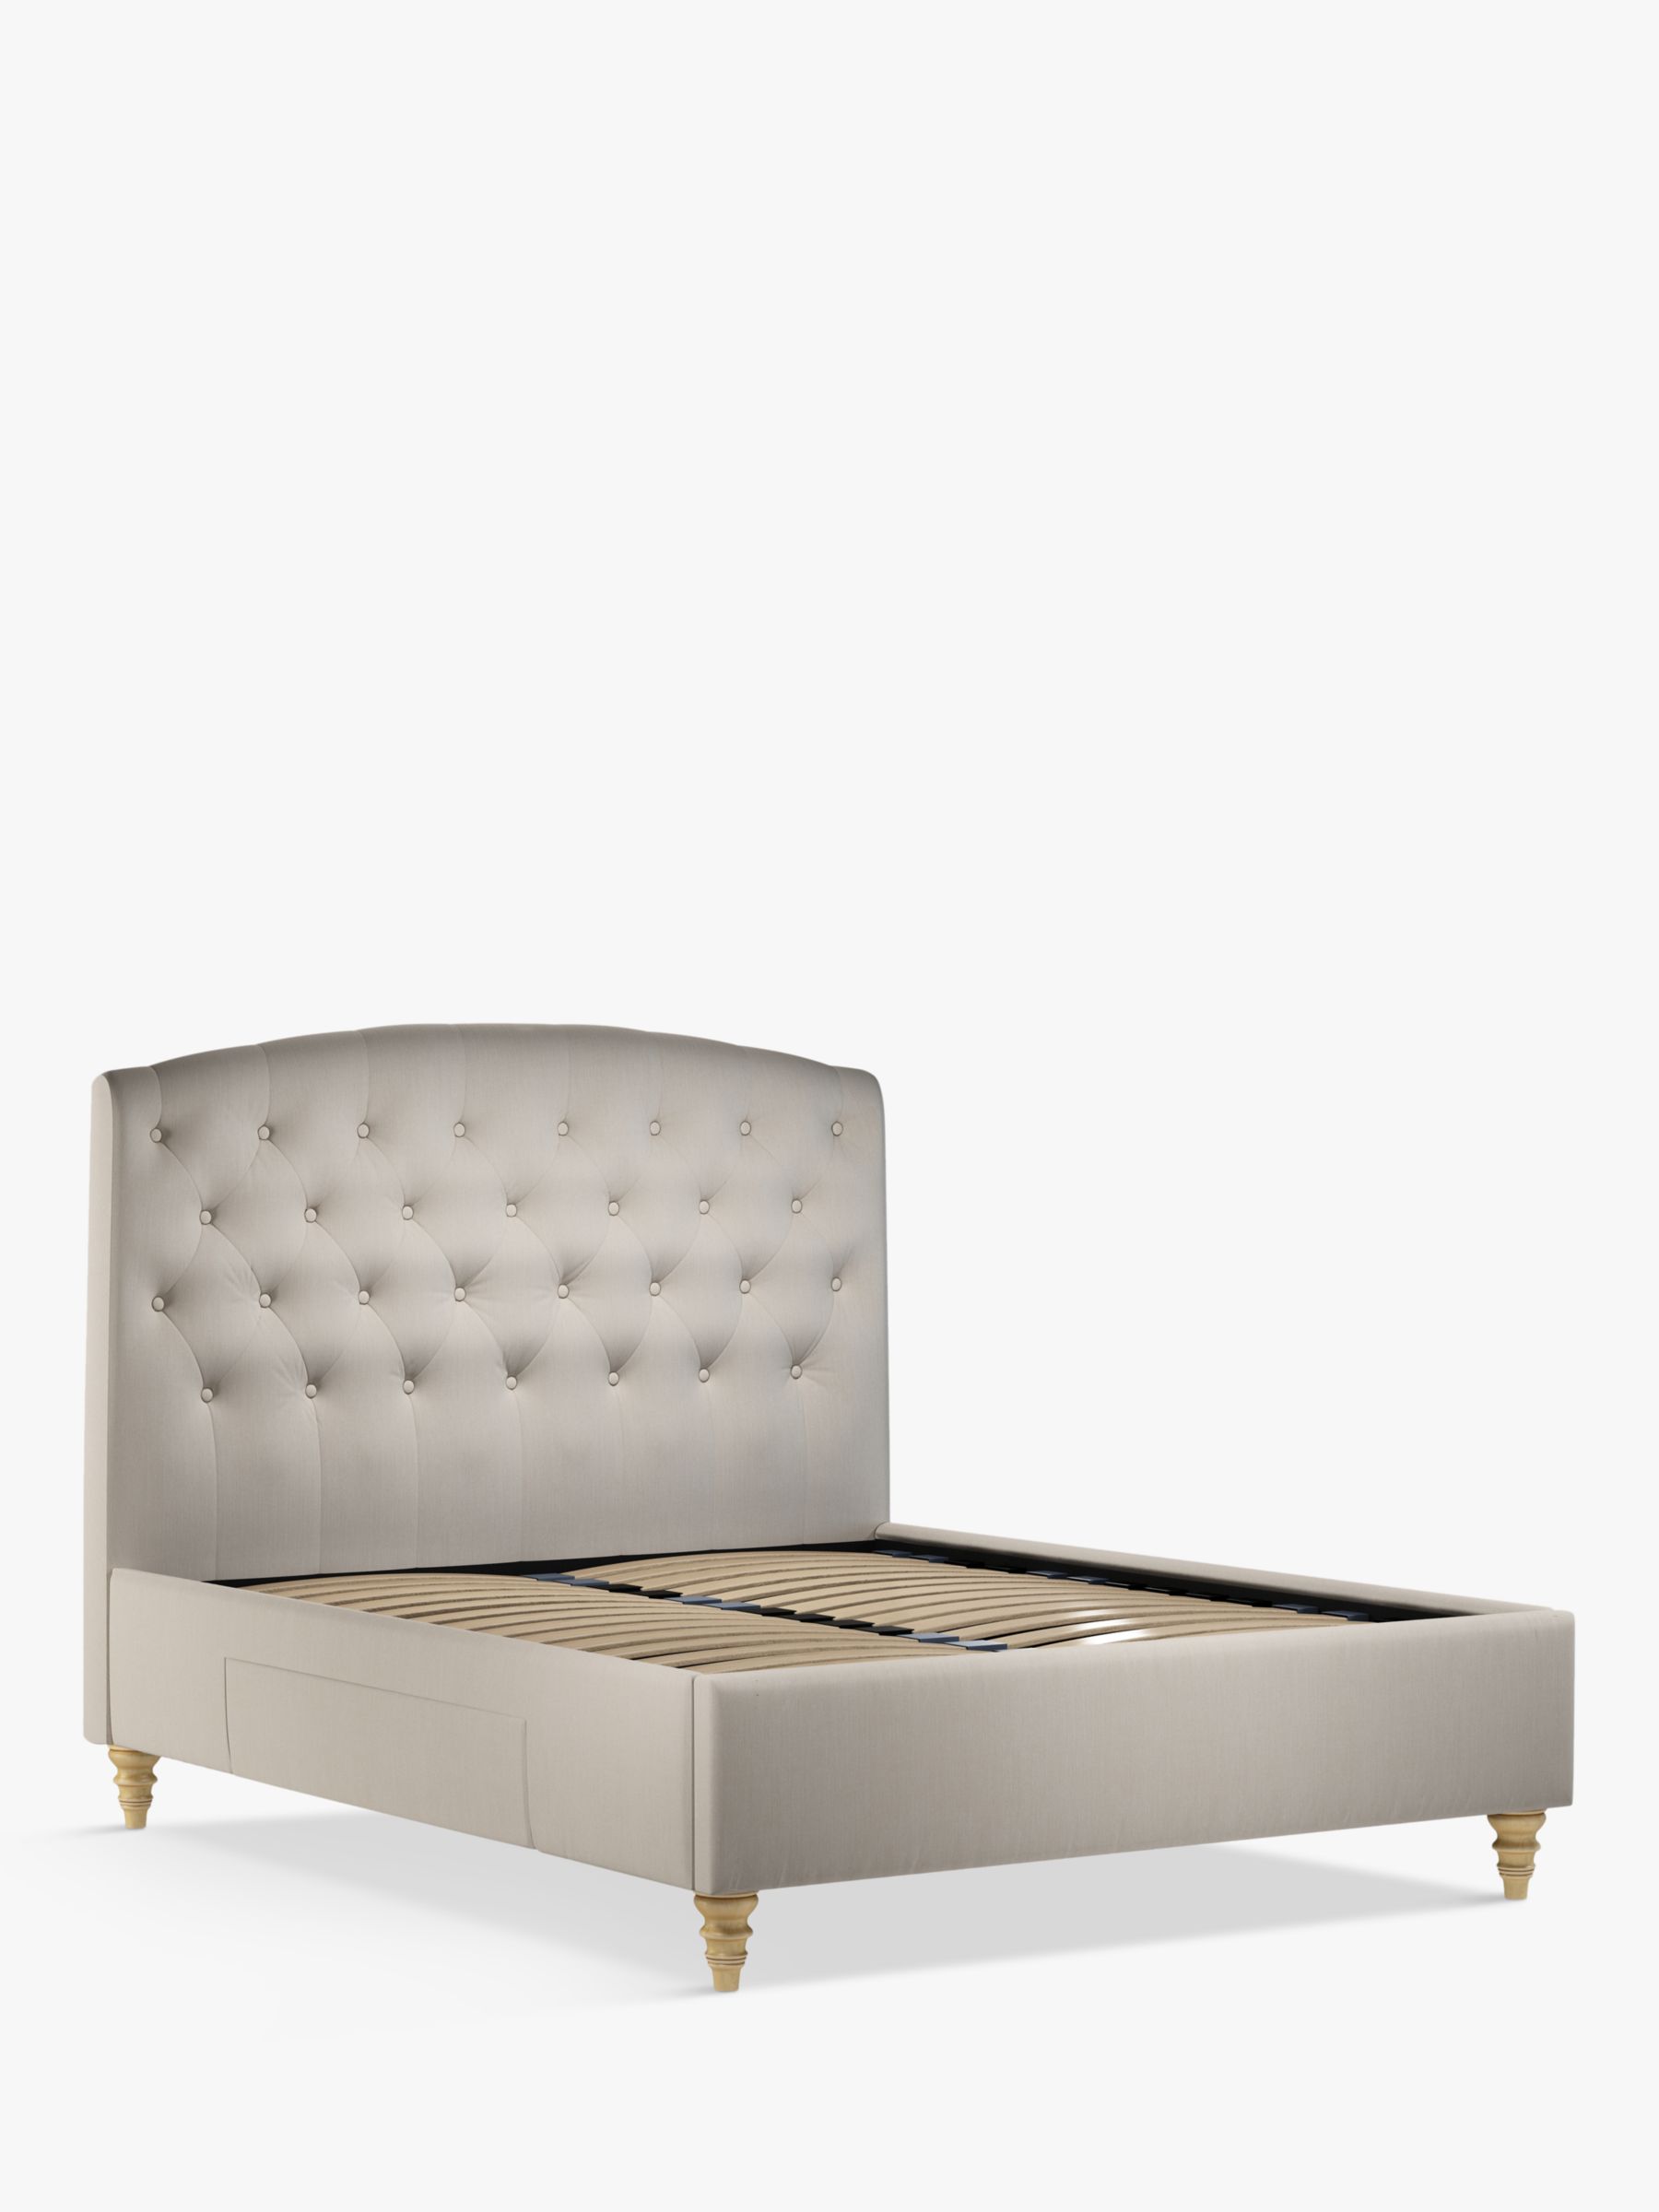 John Lewis Partners Rouen 2 Drawer Storage Upholstered Bed Frame King Size